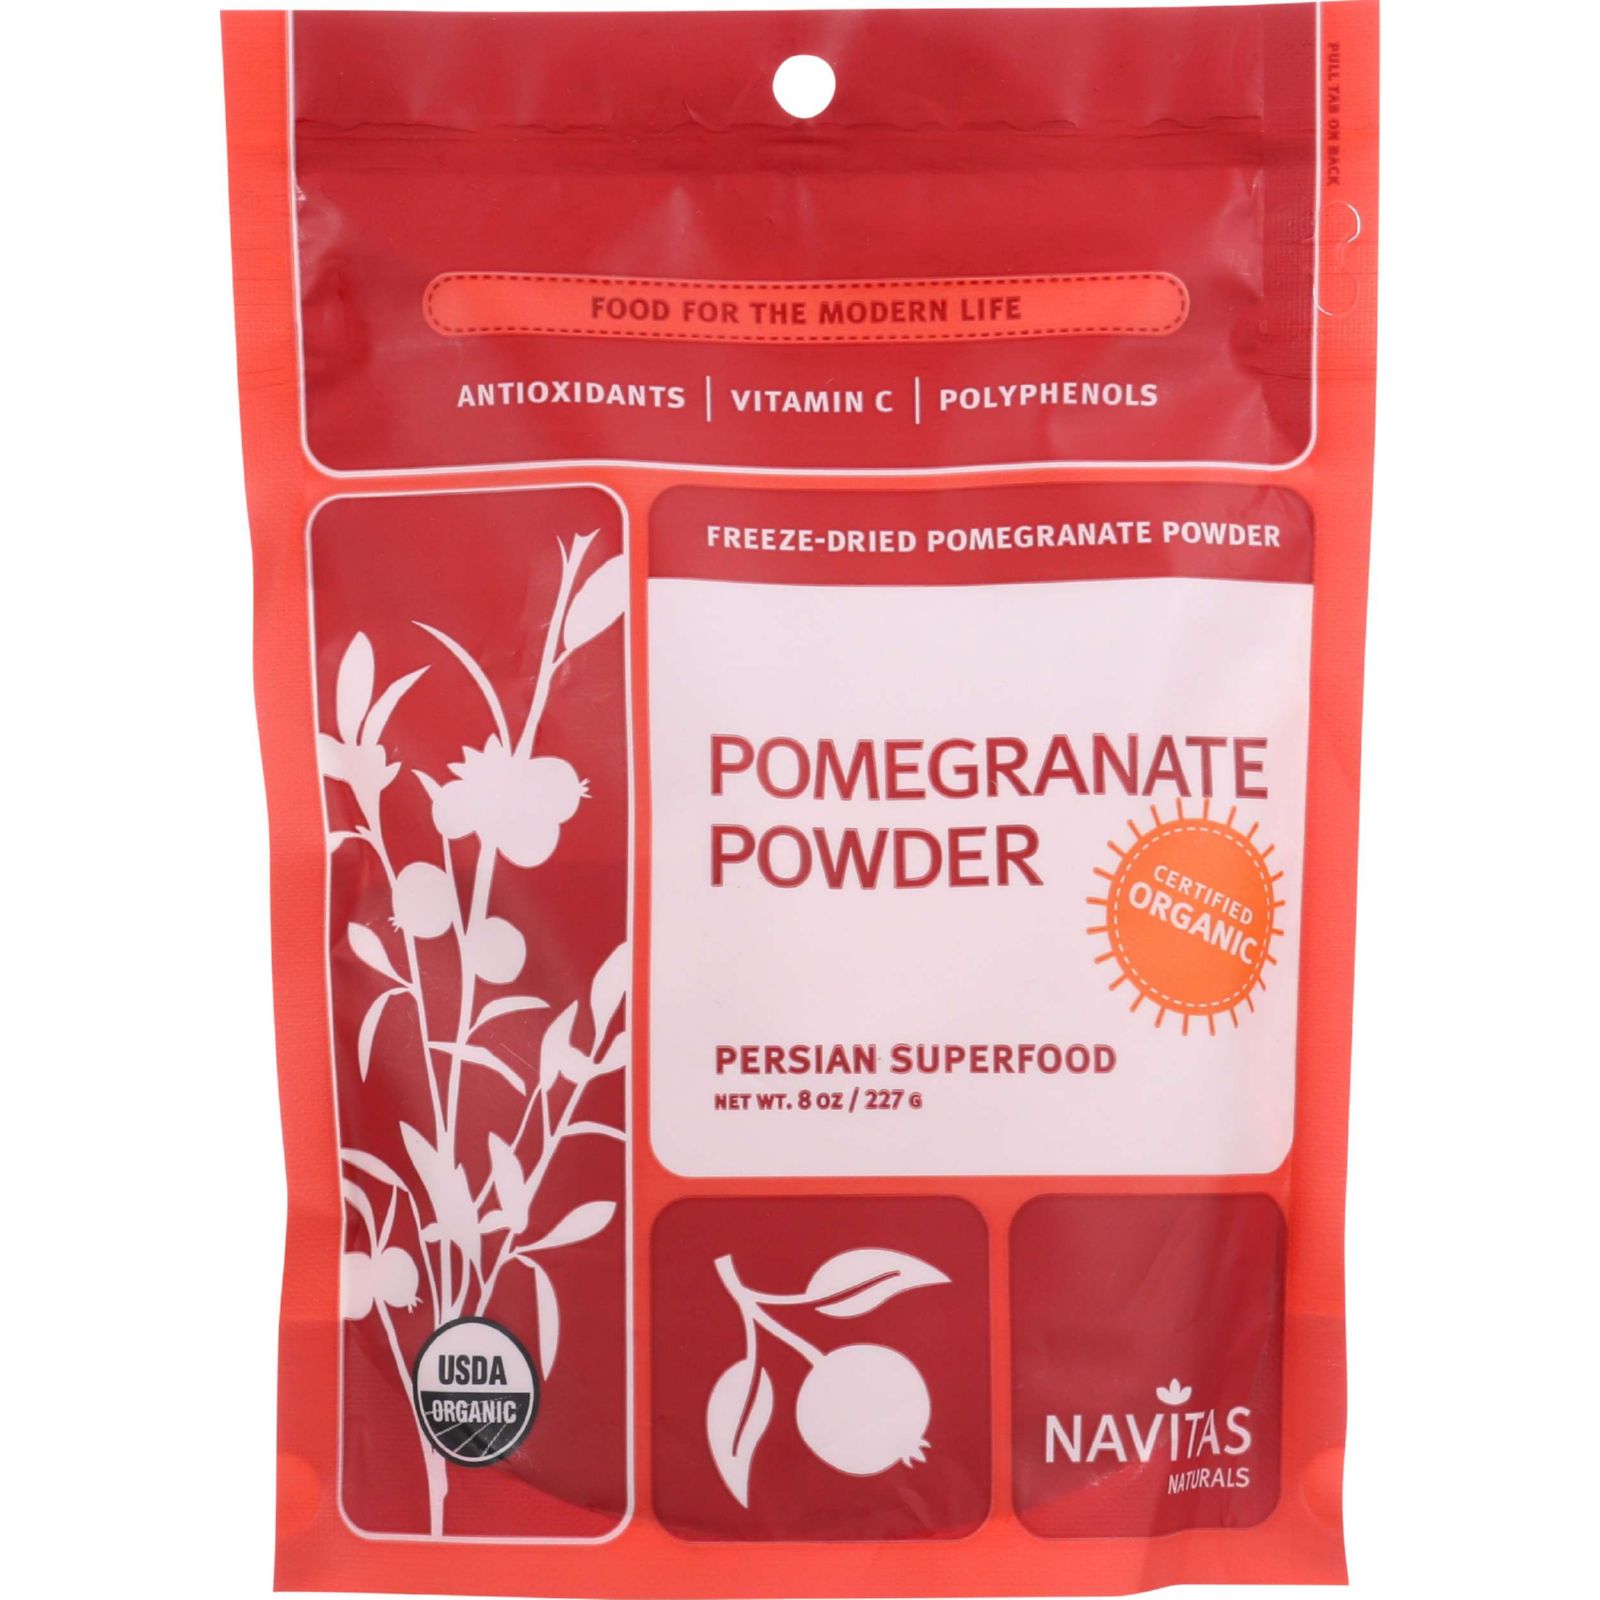 Navitas Naturals Pomegranate Powder - Organic - Freeze-Dried - 8 oz - 6개 묶음상품